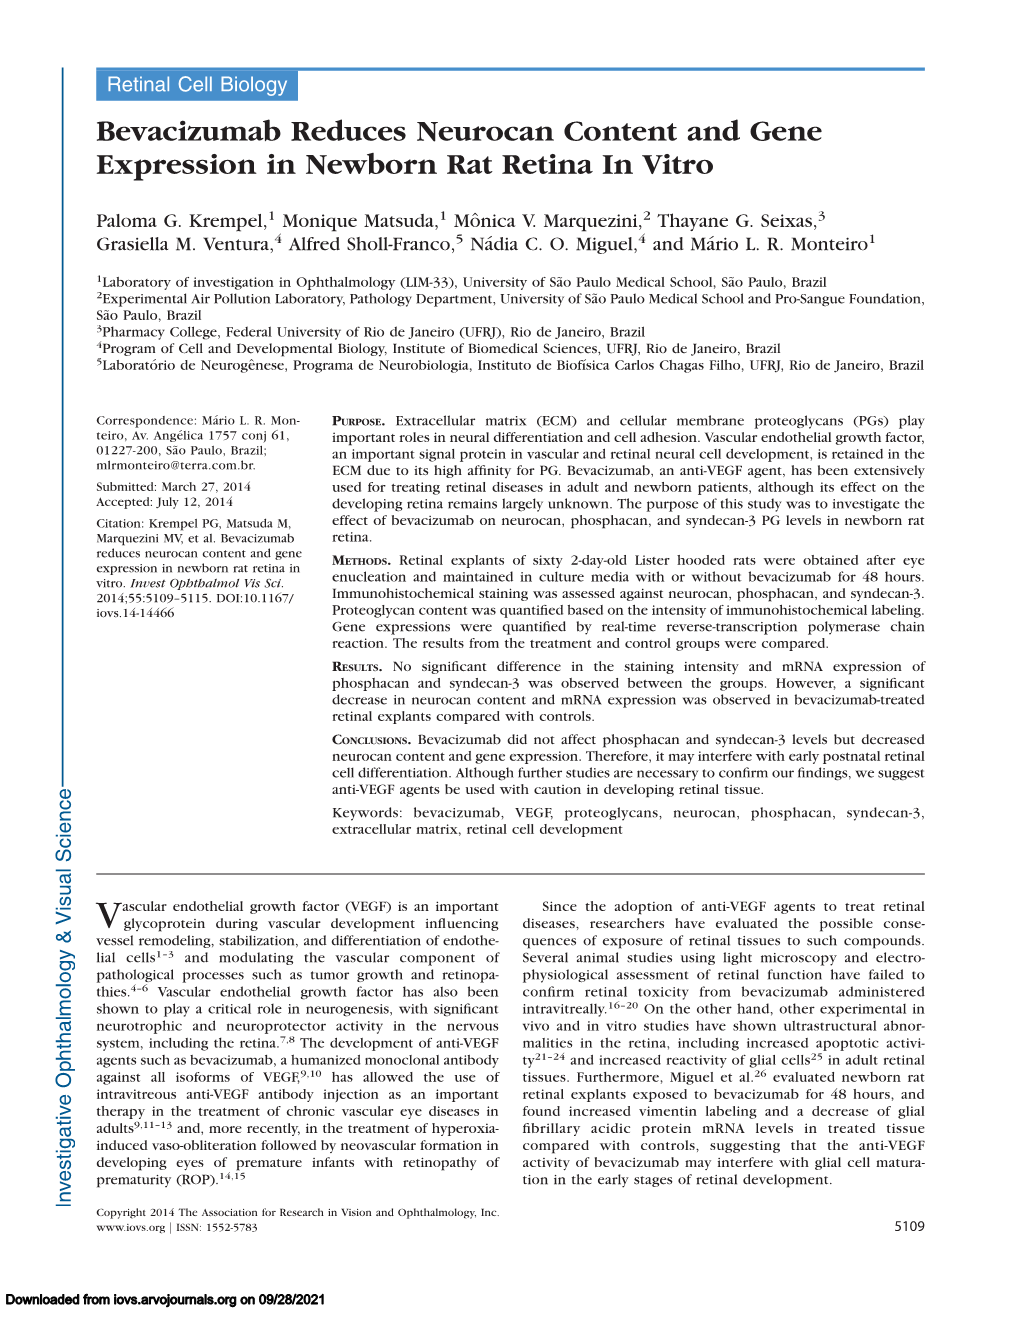 Bevacizumab Reduces Neurocan Content and Gene Expression in Newborn Rat Retina in Vitro